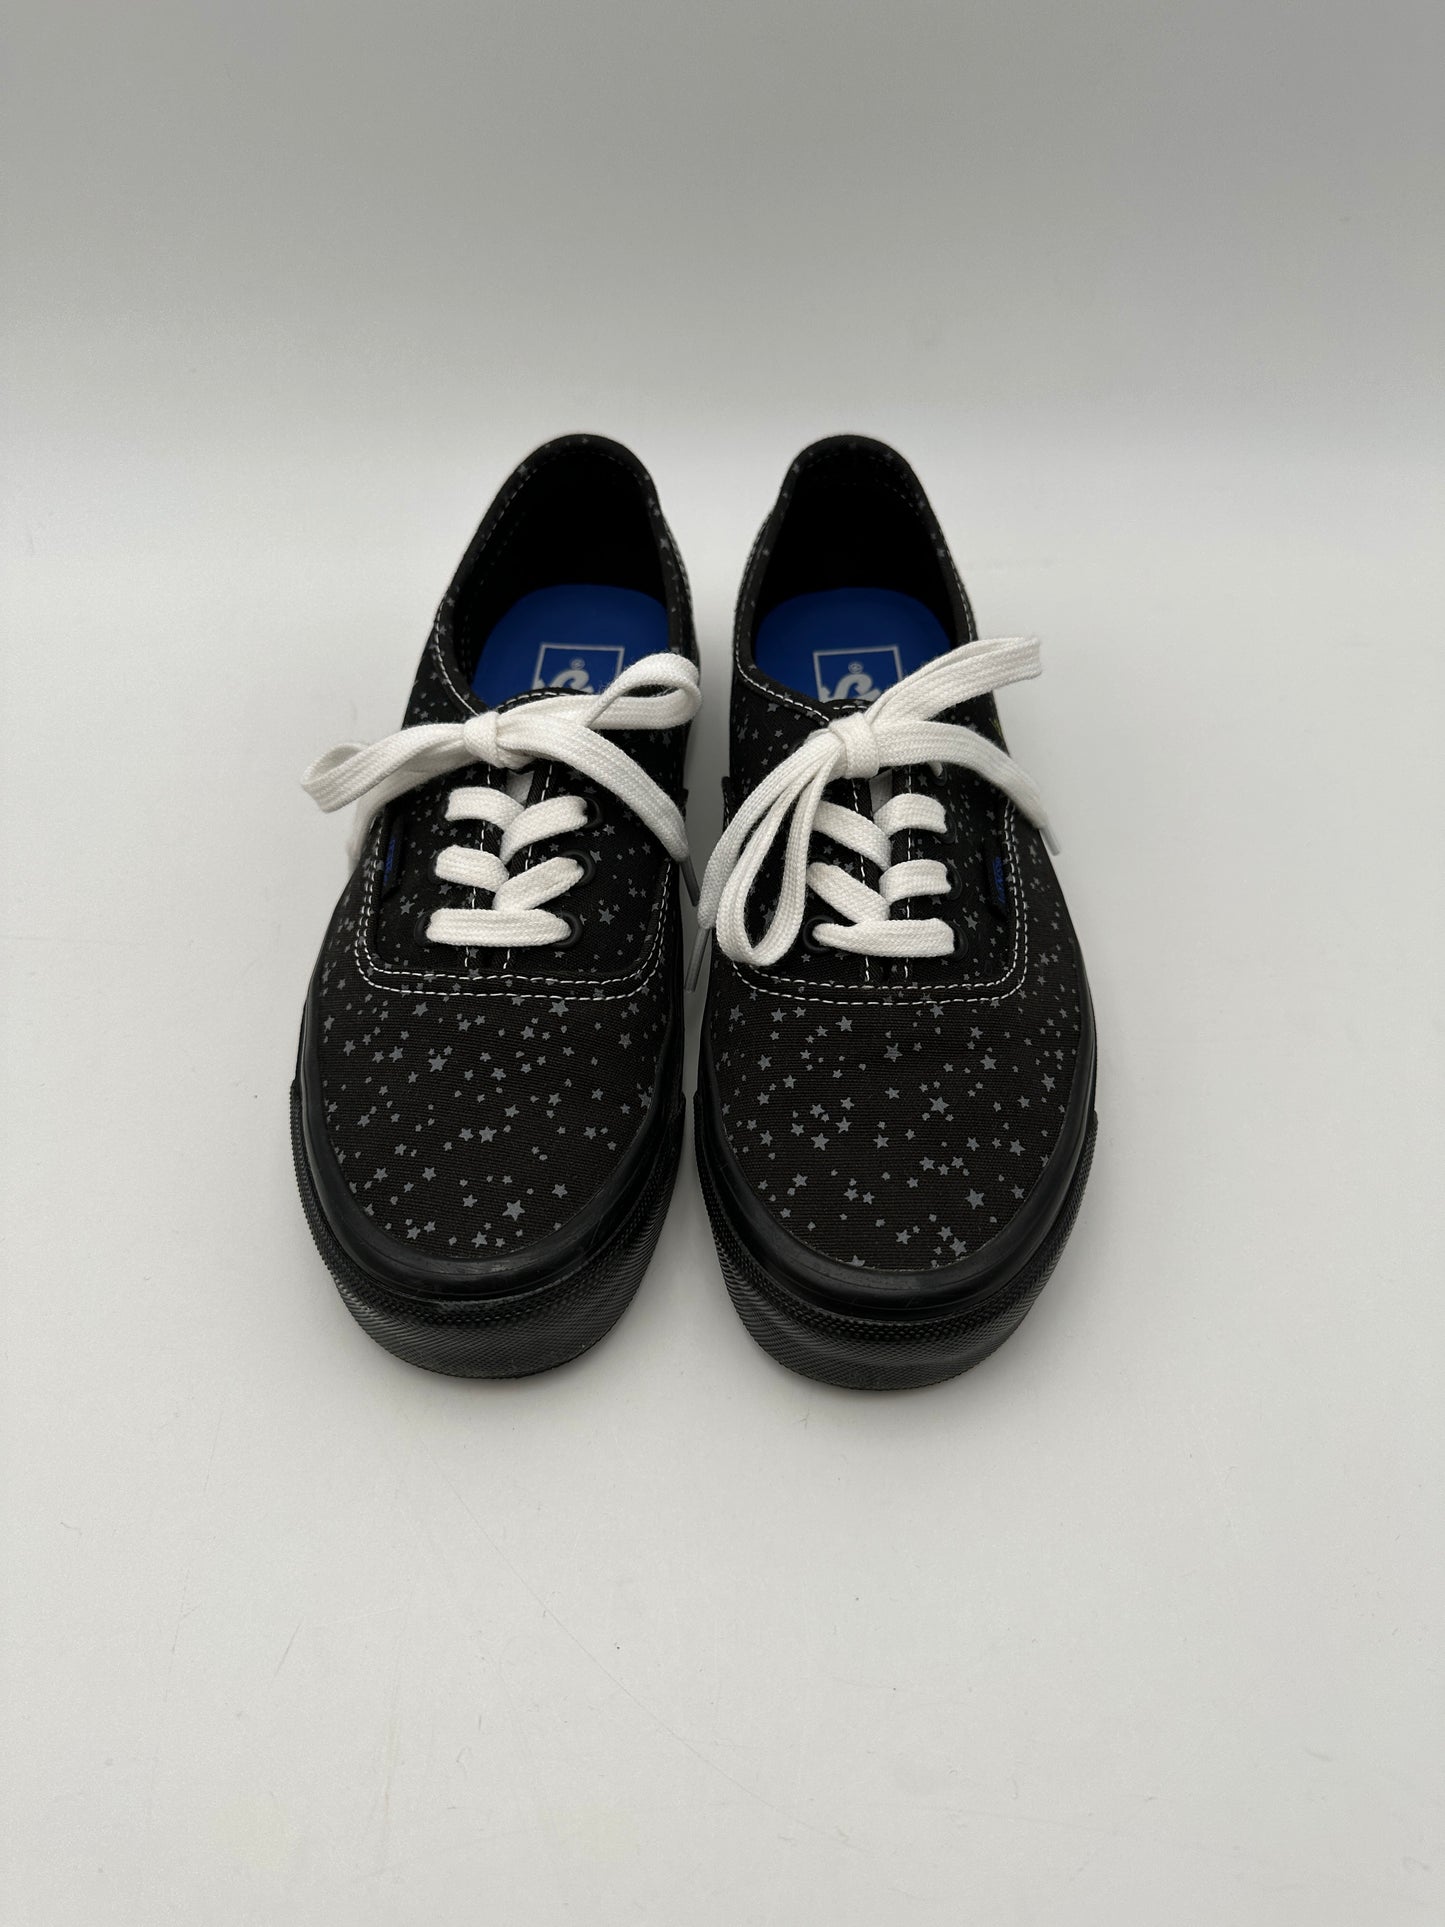 Vans Authentic Anaheim Factory Women's Size 7.5 Cosmic/Love Black Sneakers Skate Shoes